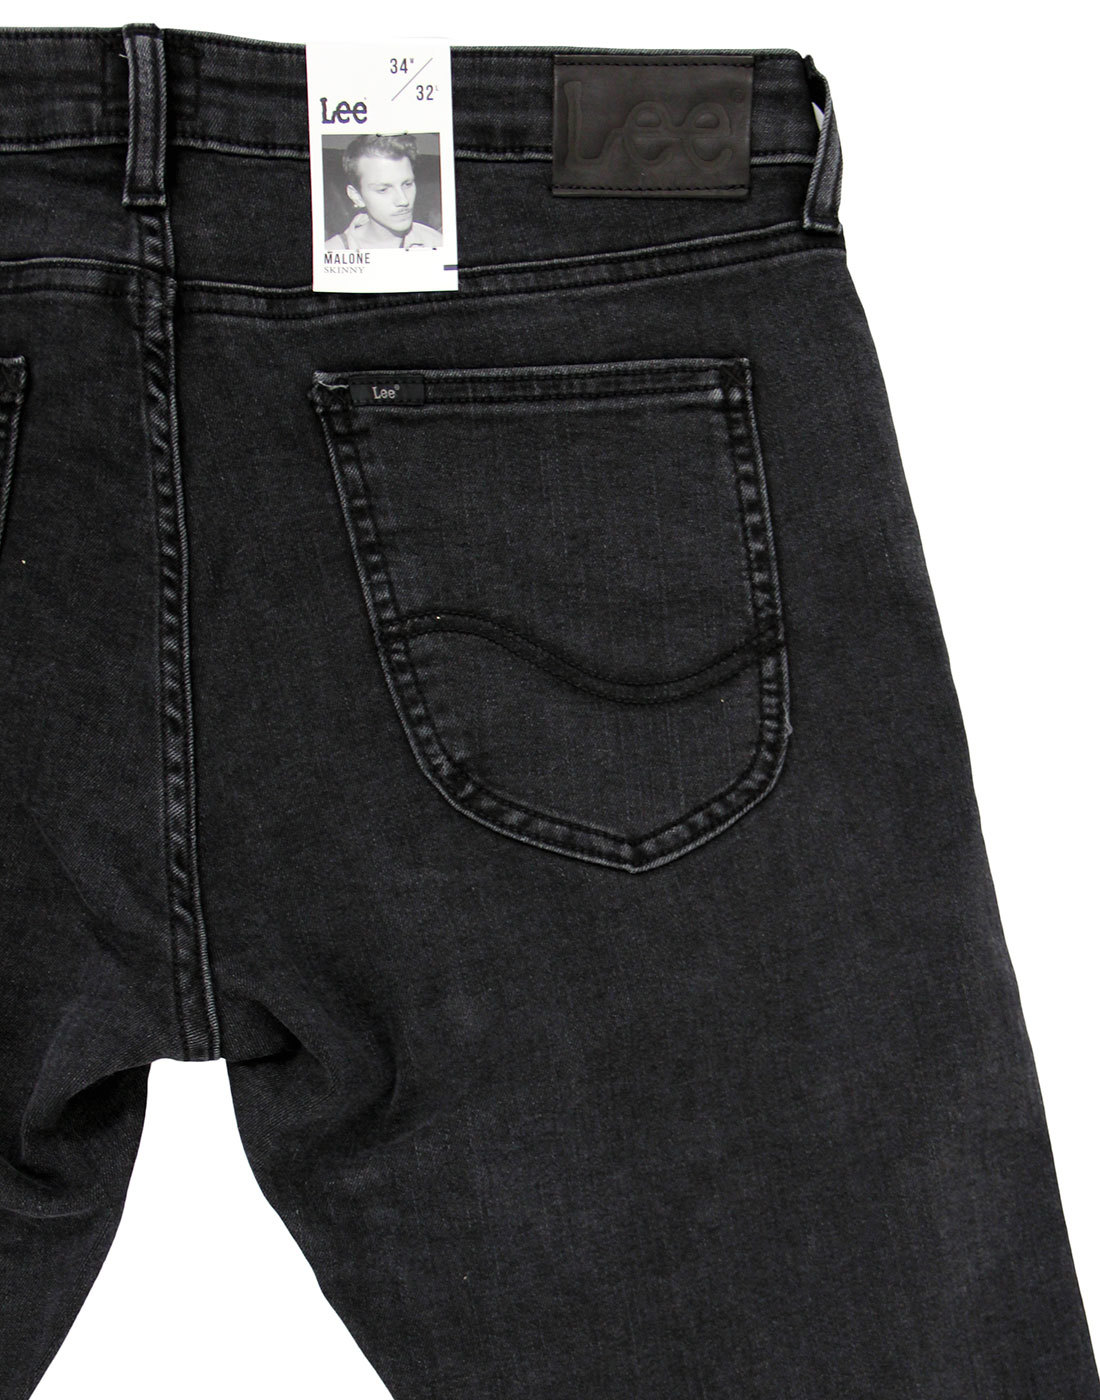 LEE Malone Men's Retro Regular Waist Skinny Jeans in Tailor Black